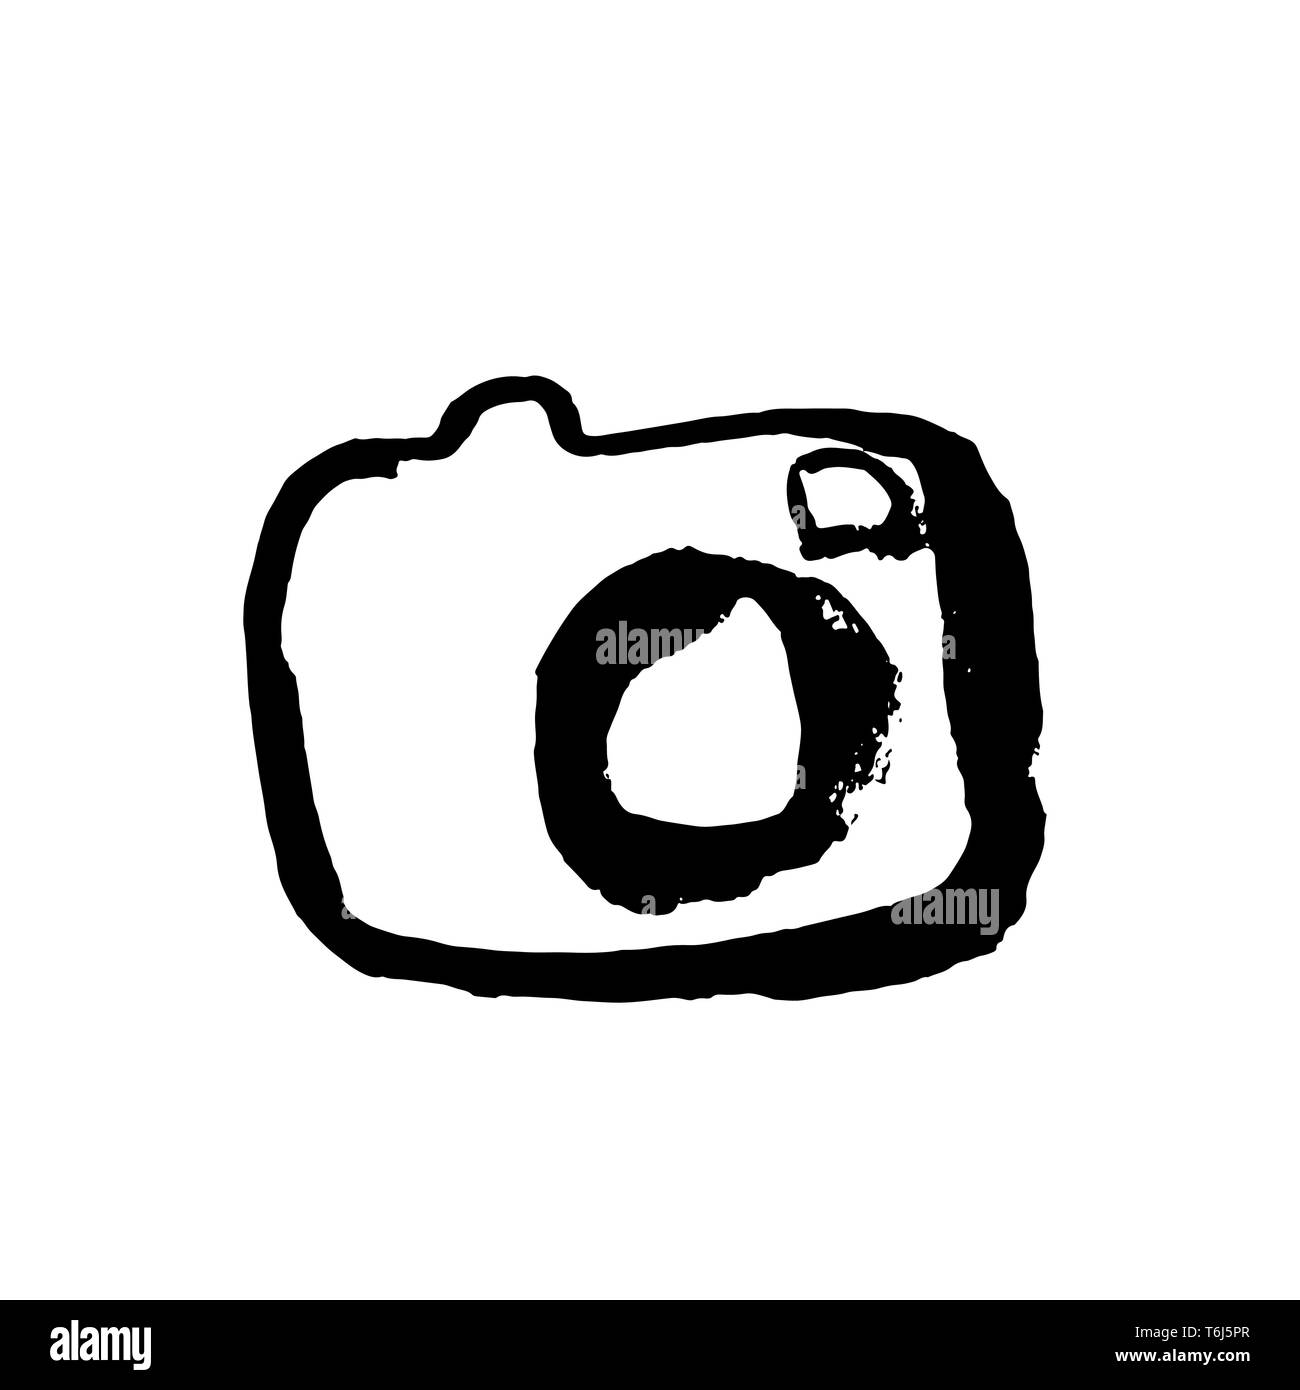 Camera grunge icon. Vector photocamera dry brush illustration. Stock Vector